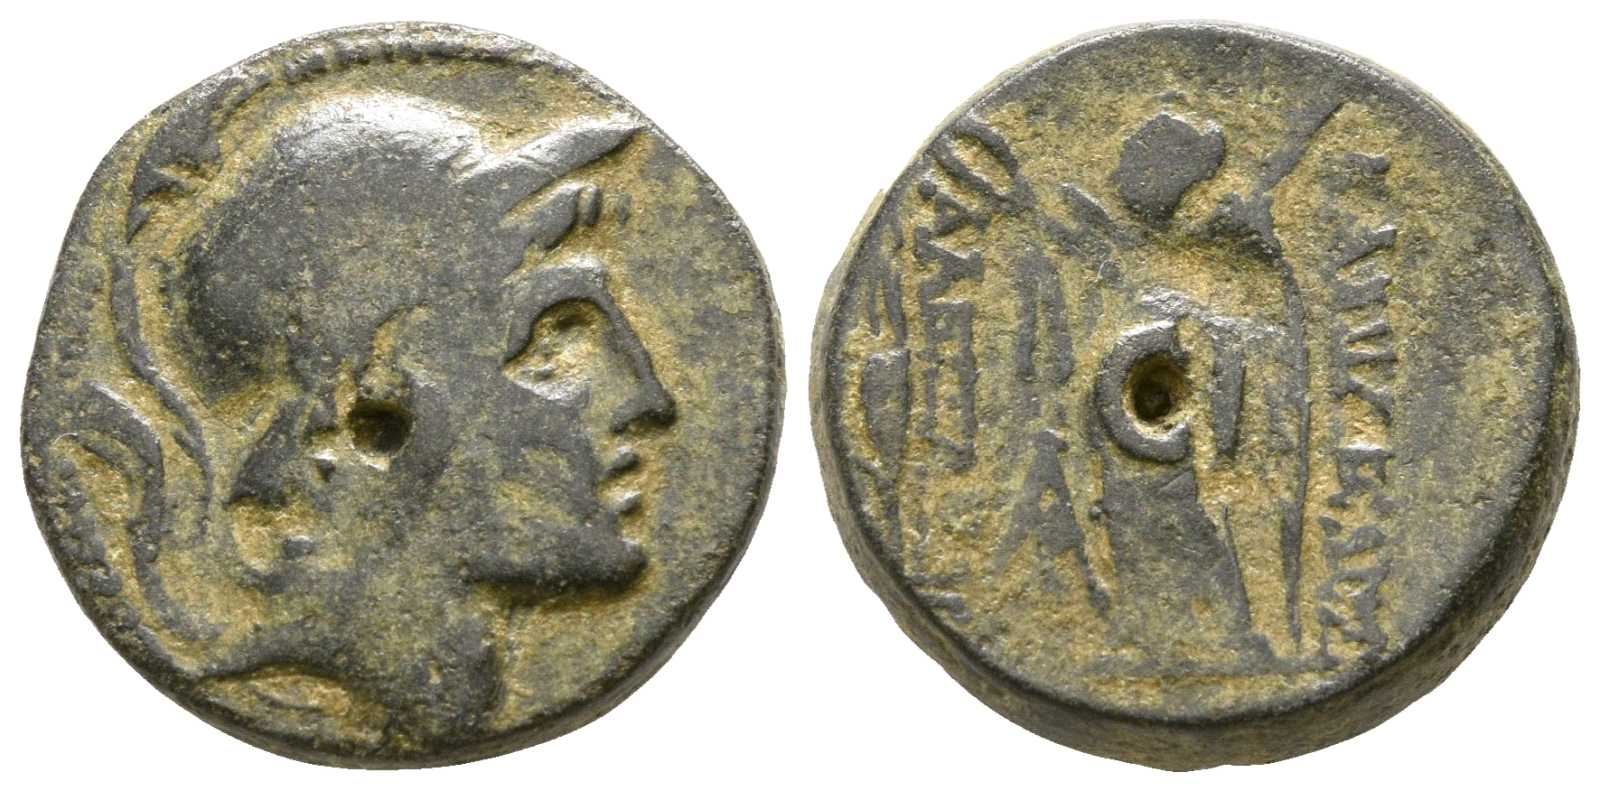 6759 Regnum Syriae Alexander I Antiochia ad Orondem